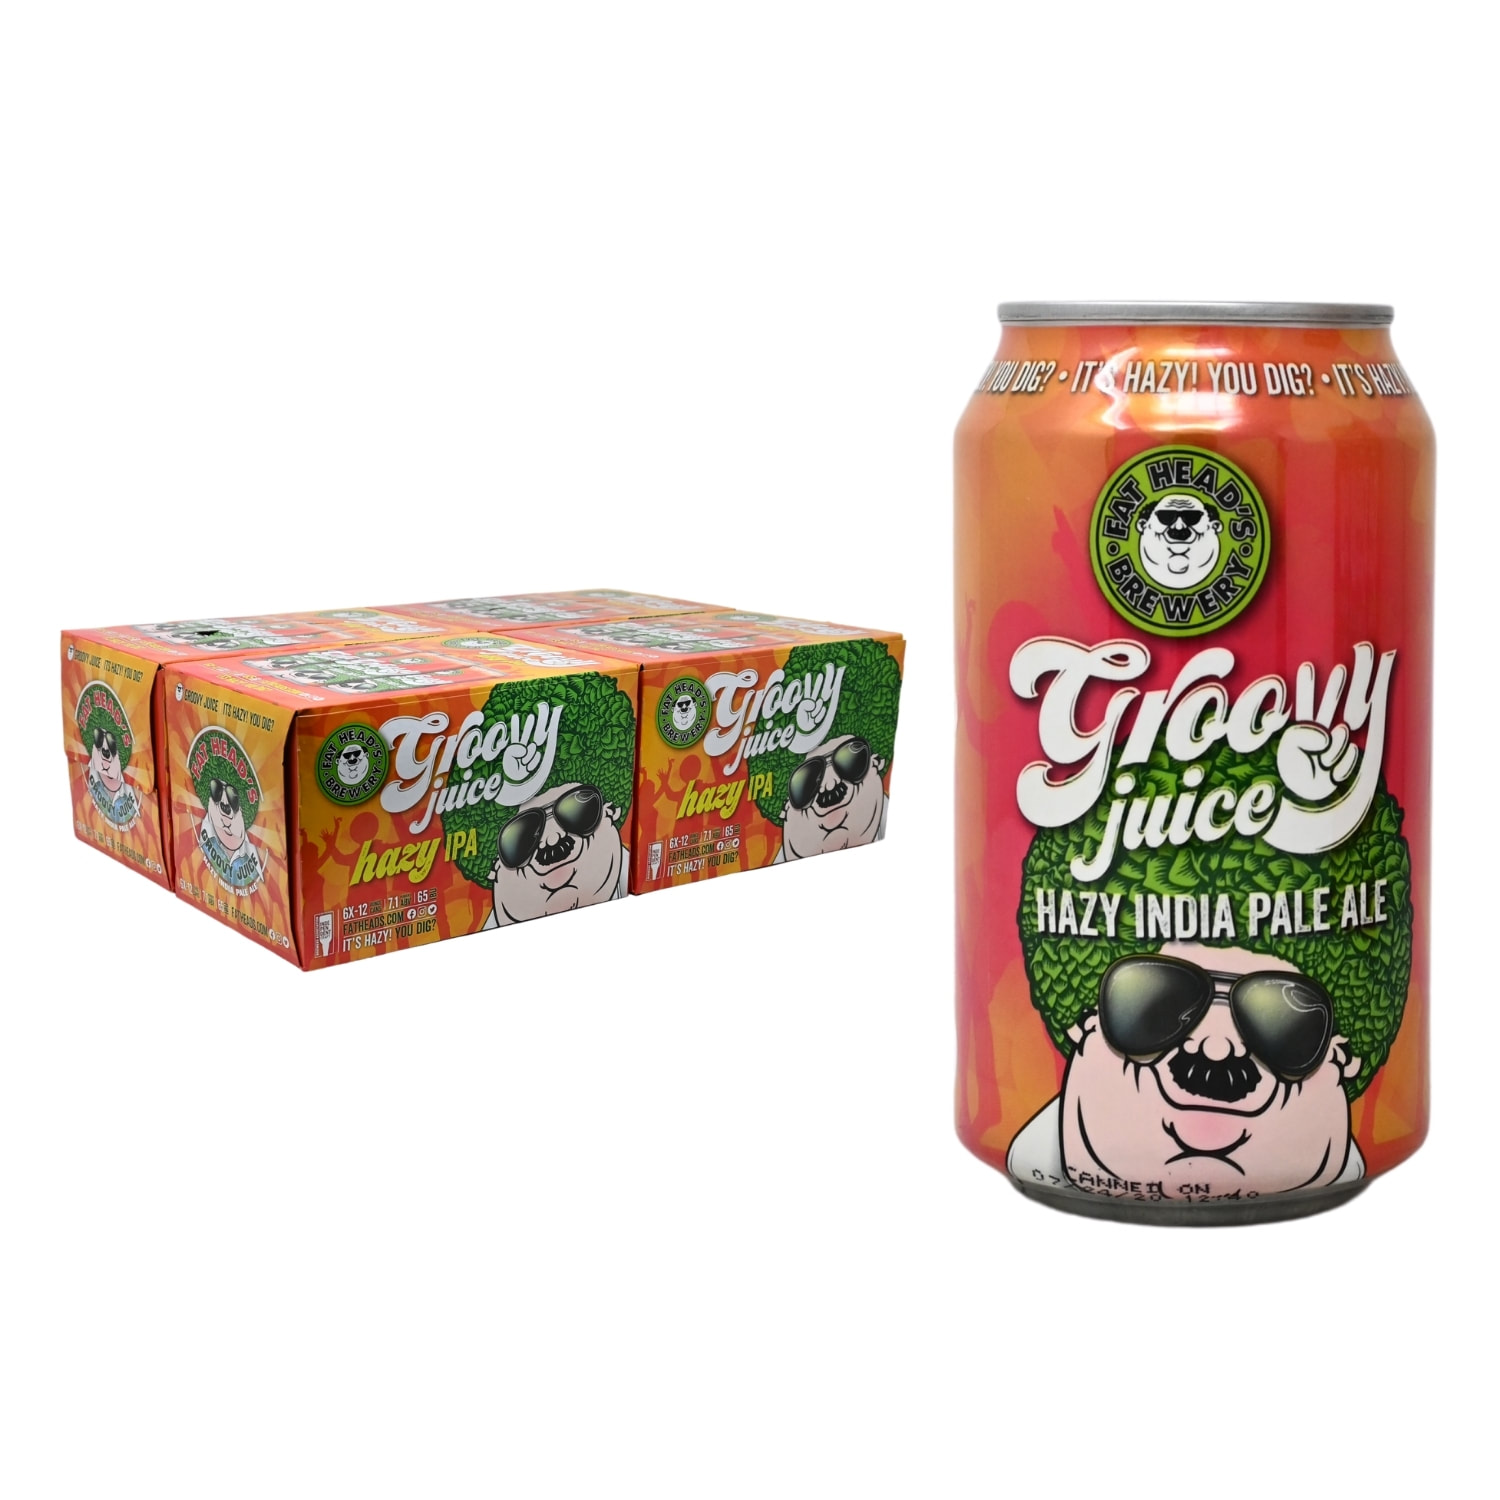 images/beer/IPA BEER/Fat Head's Groovy Juice.jpg